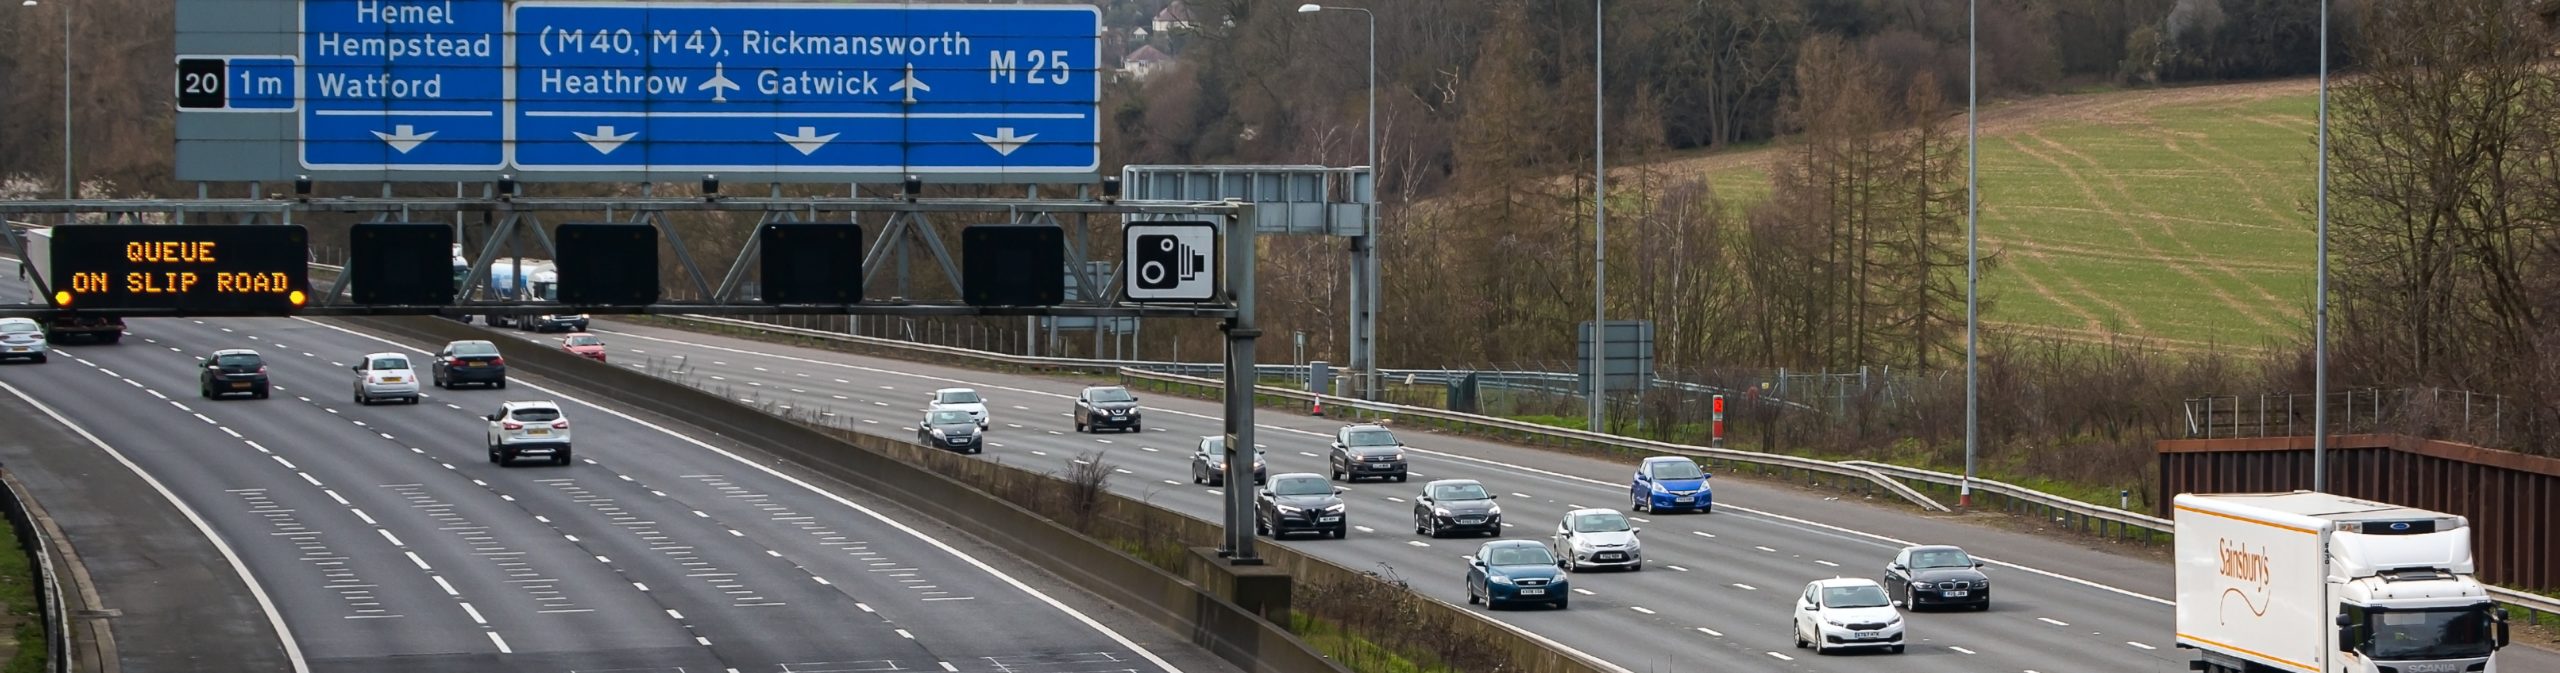 M1 smart motorway